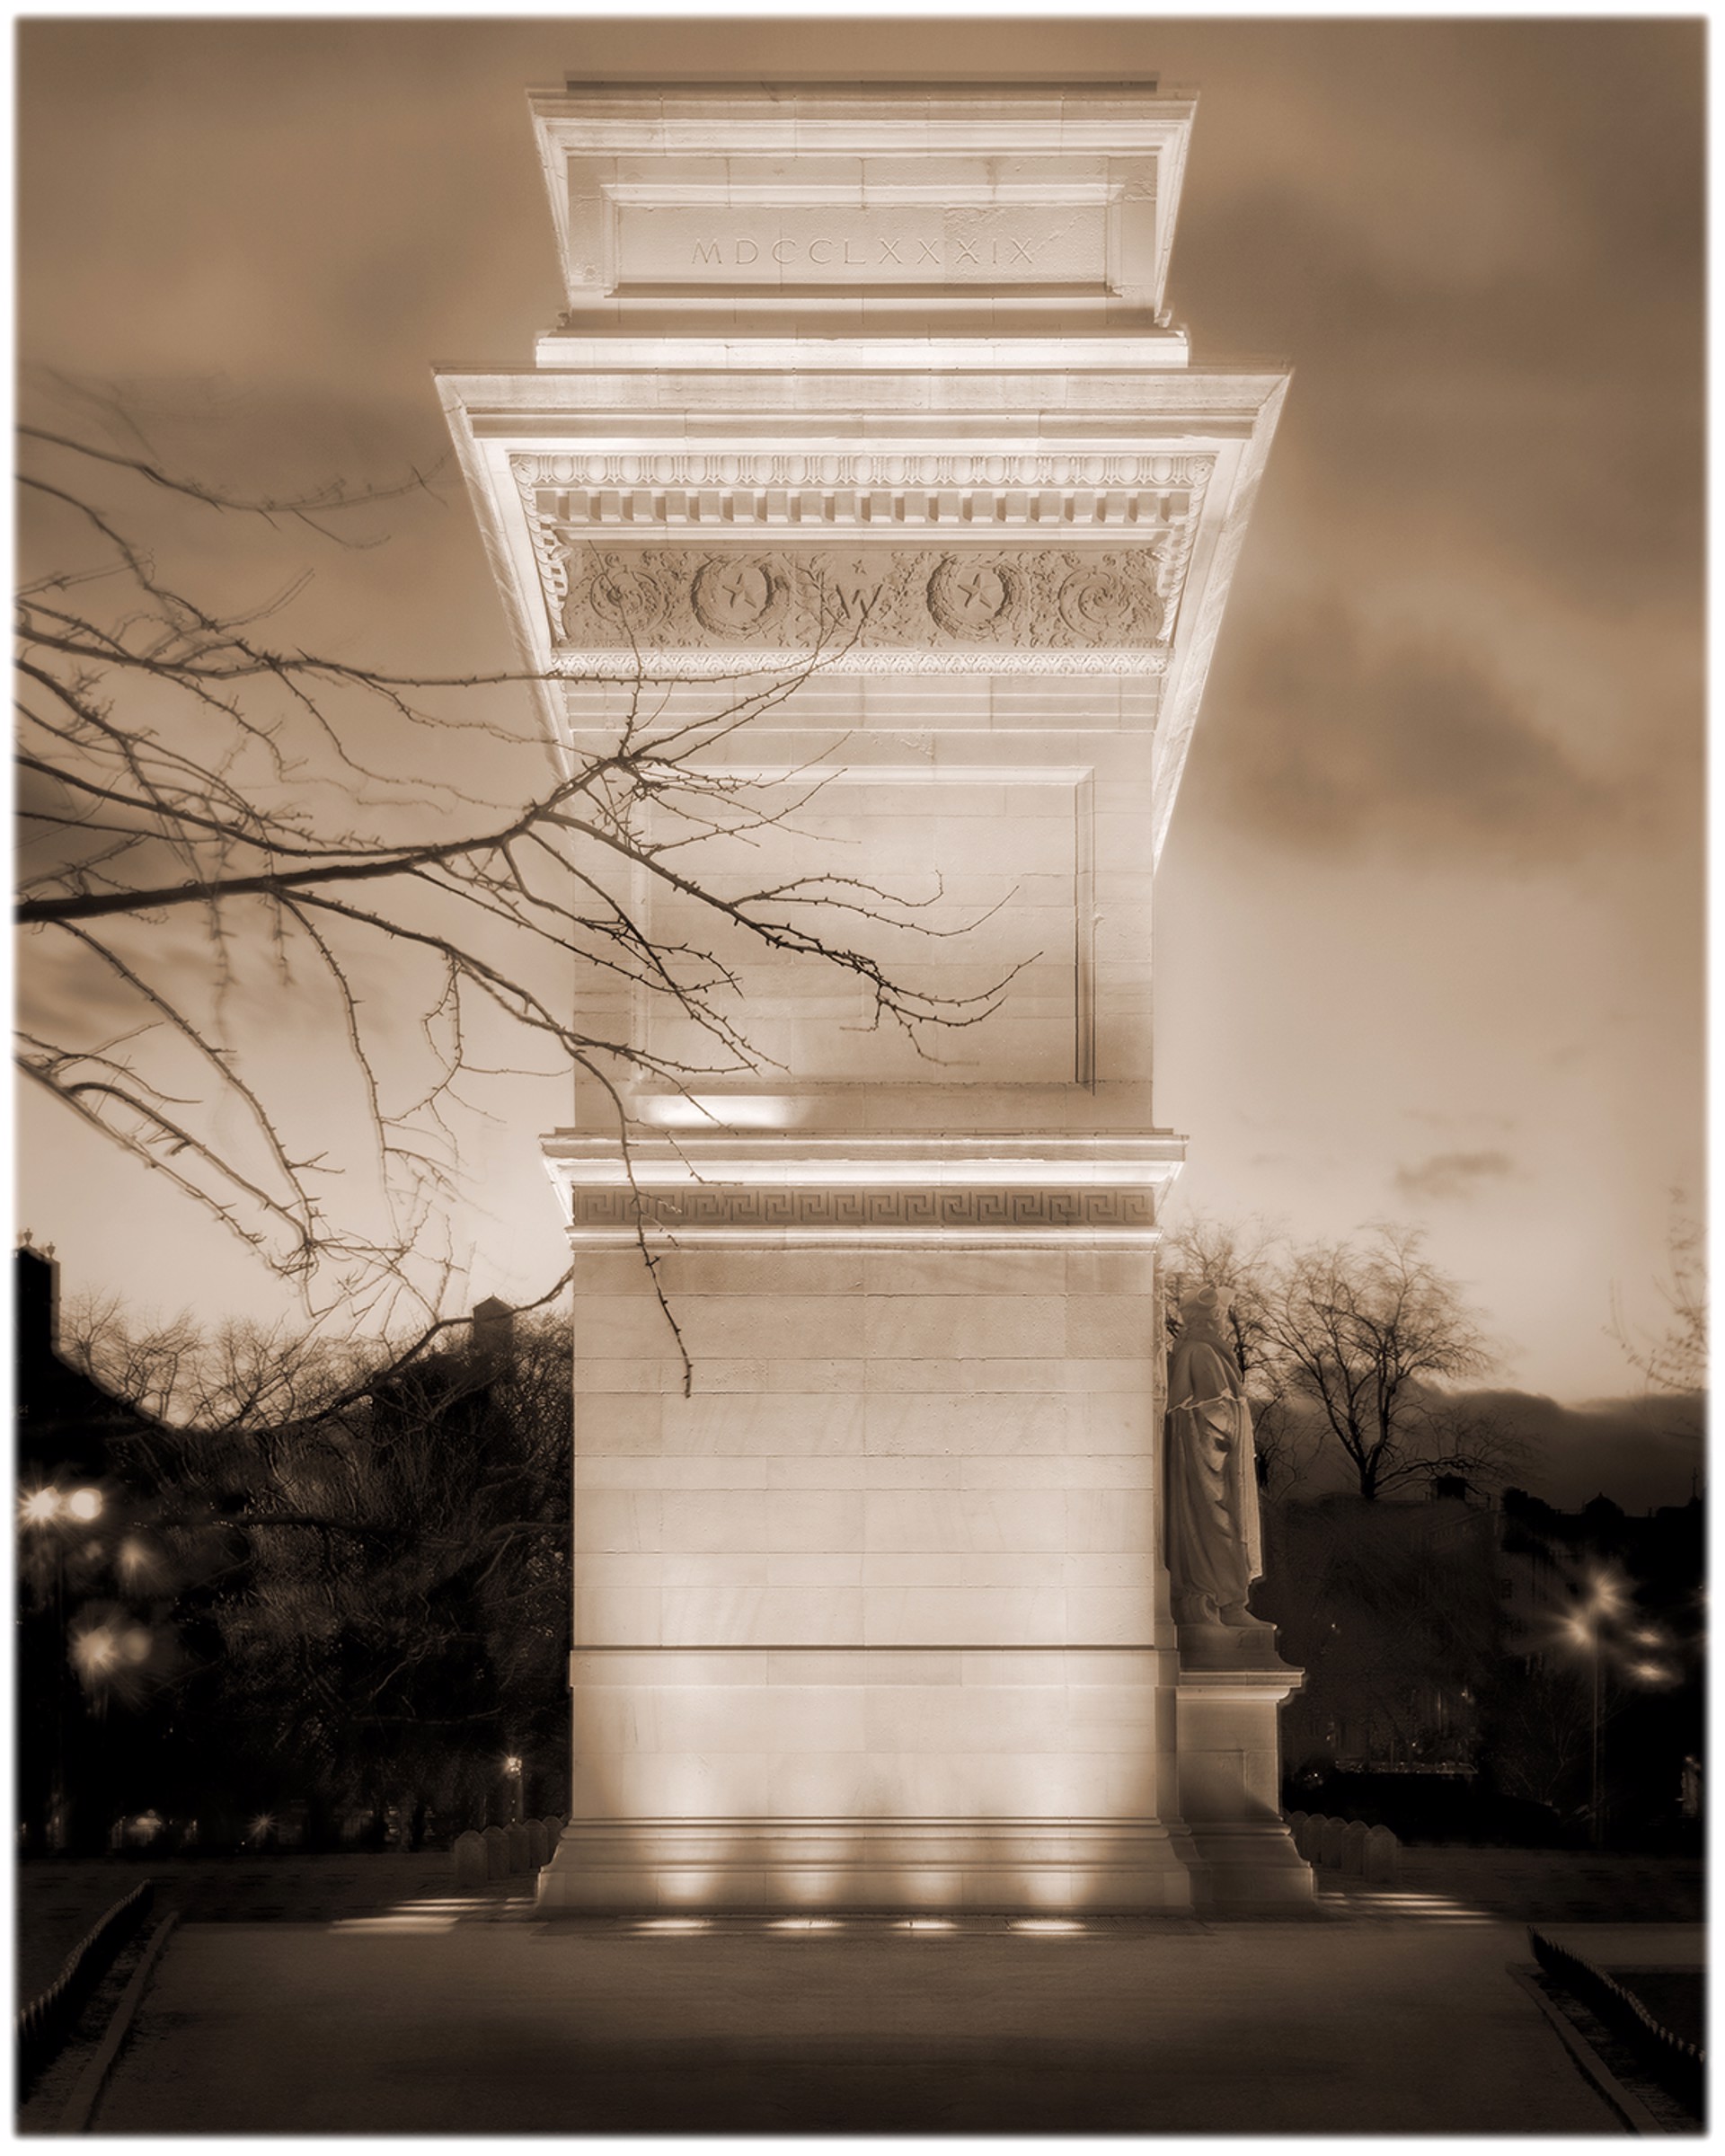 Washington Square Arch #3 by James Bleecker